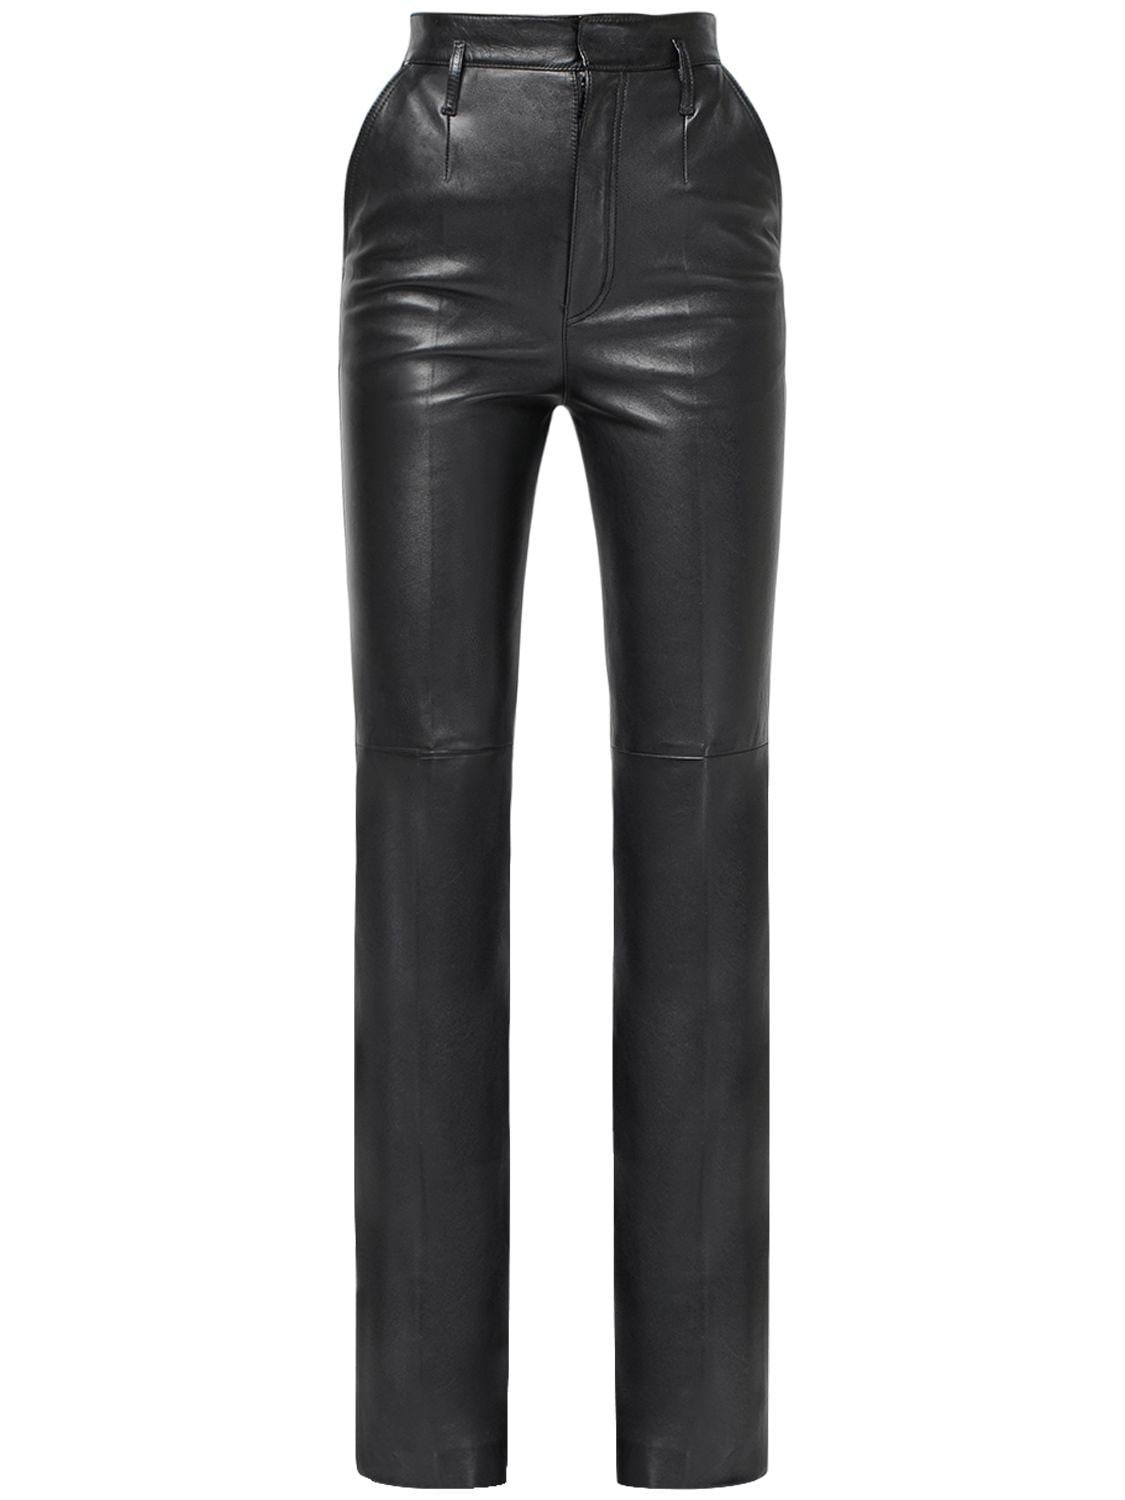 Image of High Waist Leather Pants